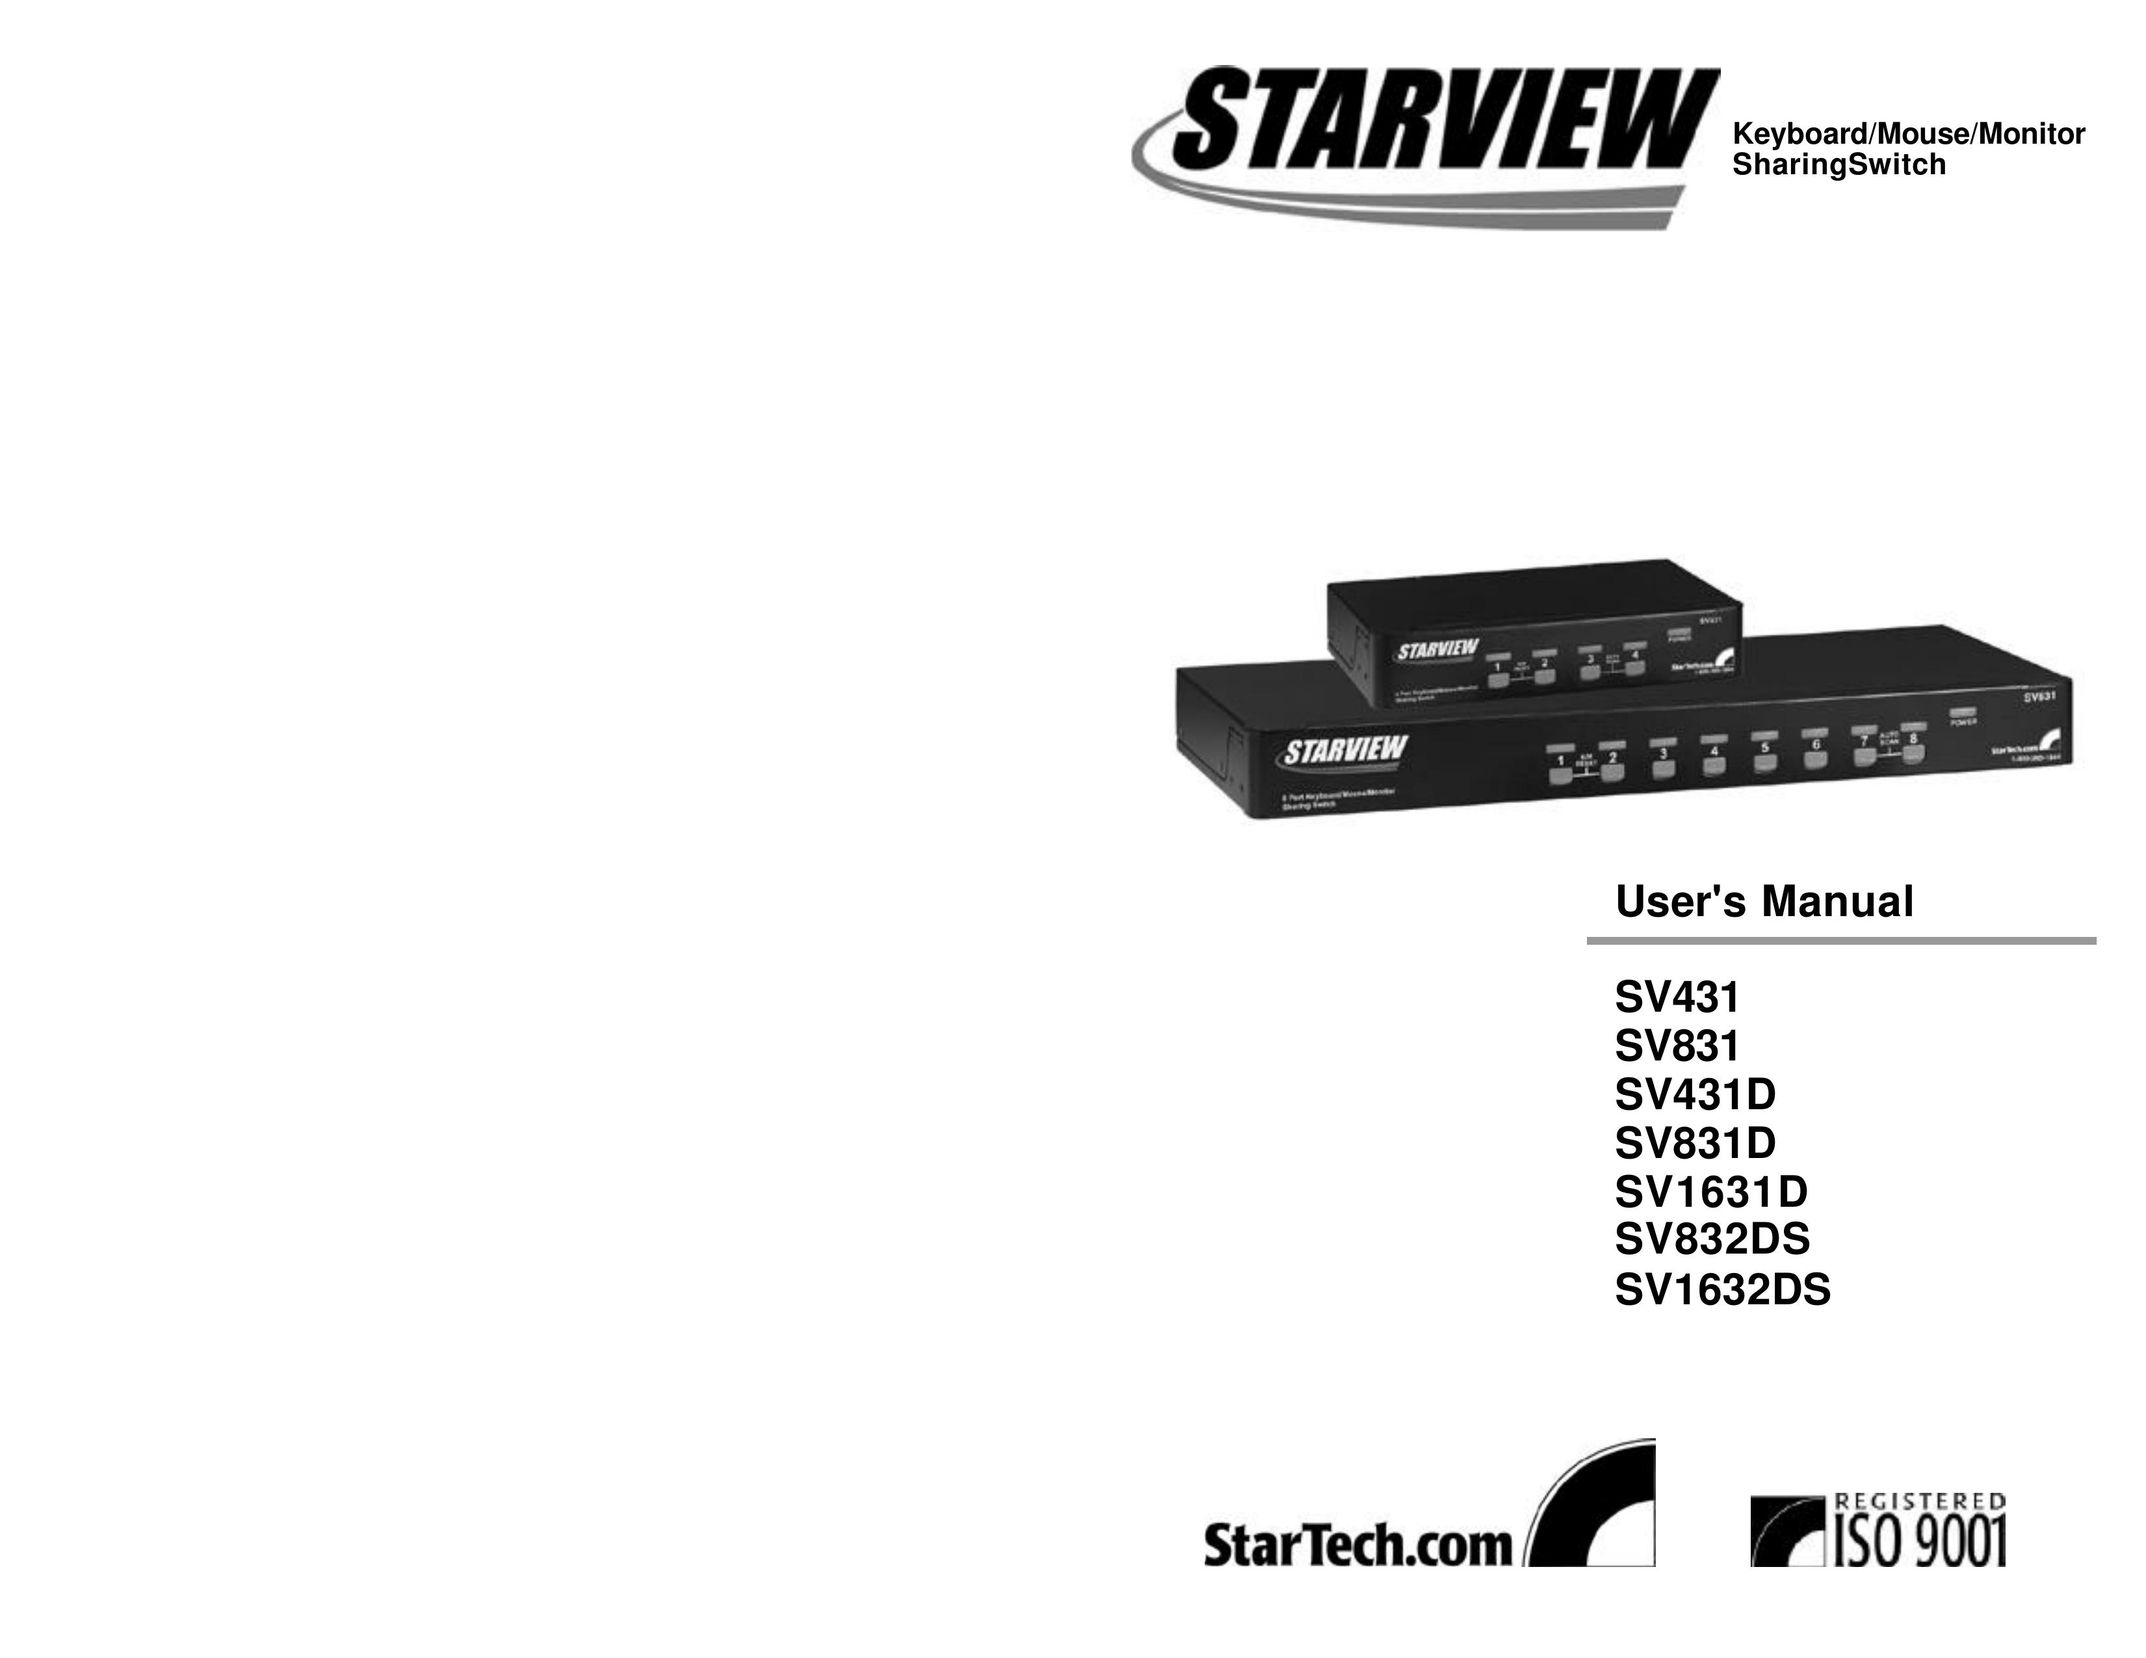 StarTech.com SV1632DS Switch User Manual